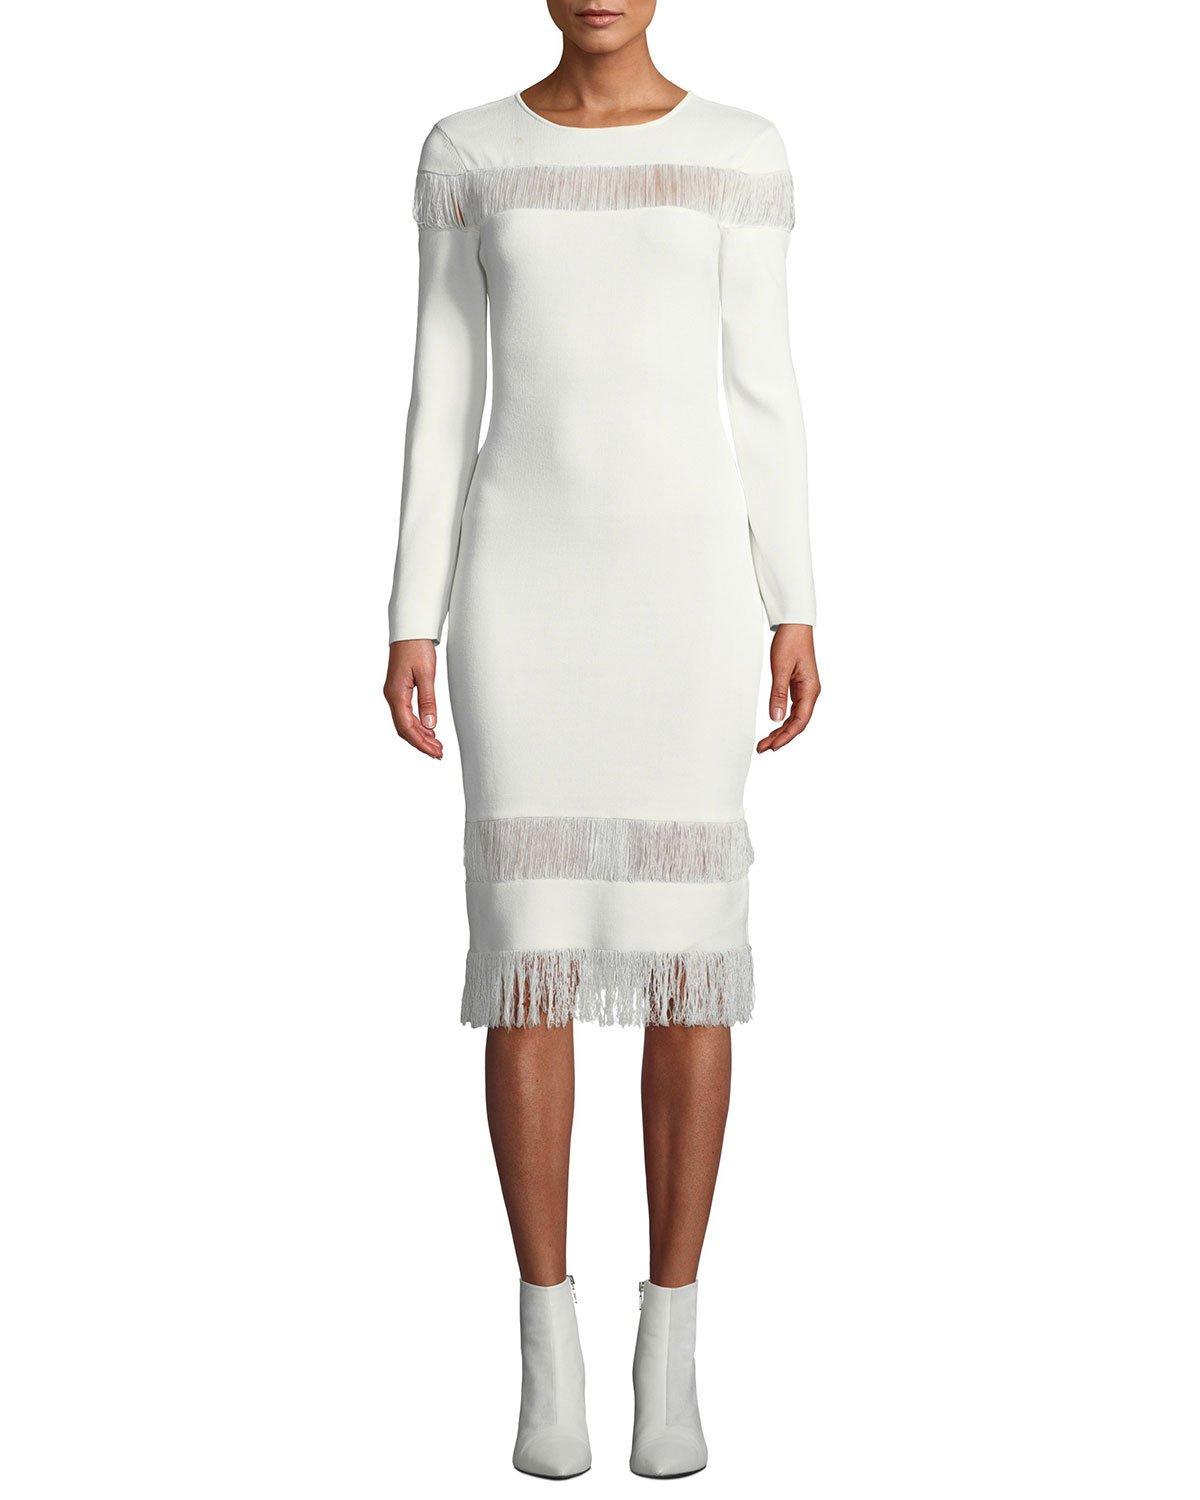 white long sleeve fringe dress